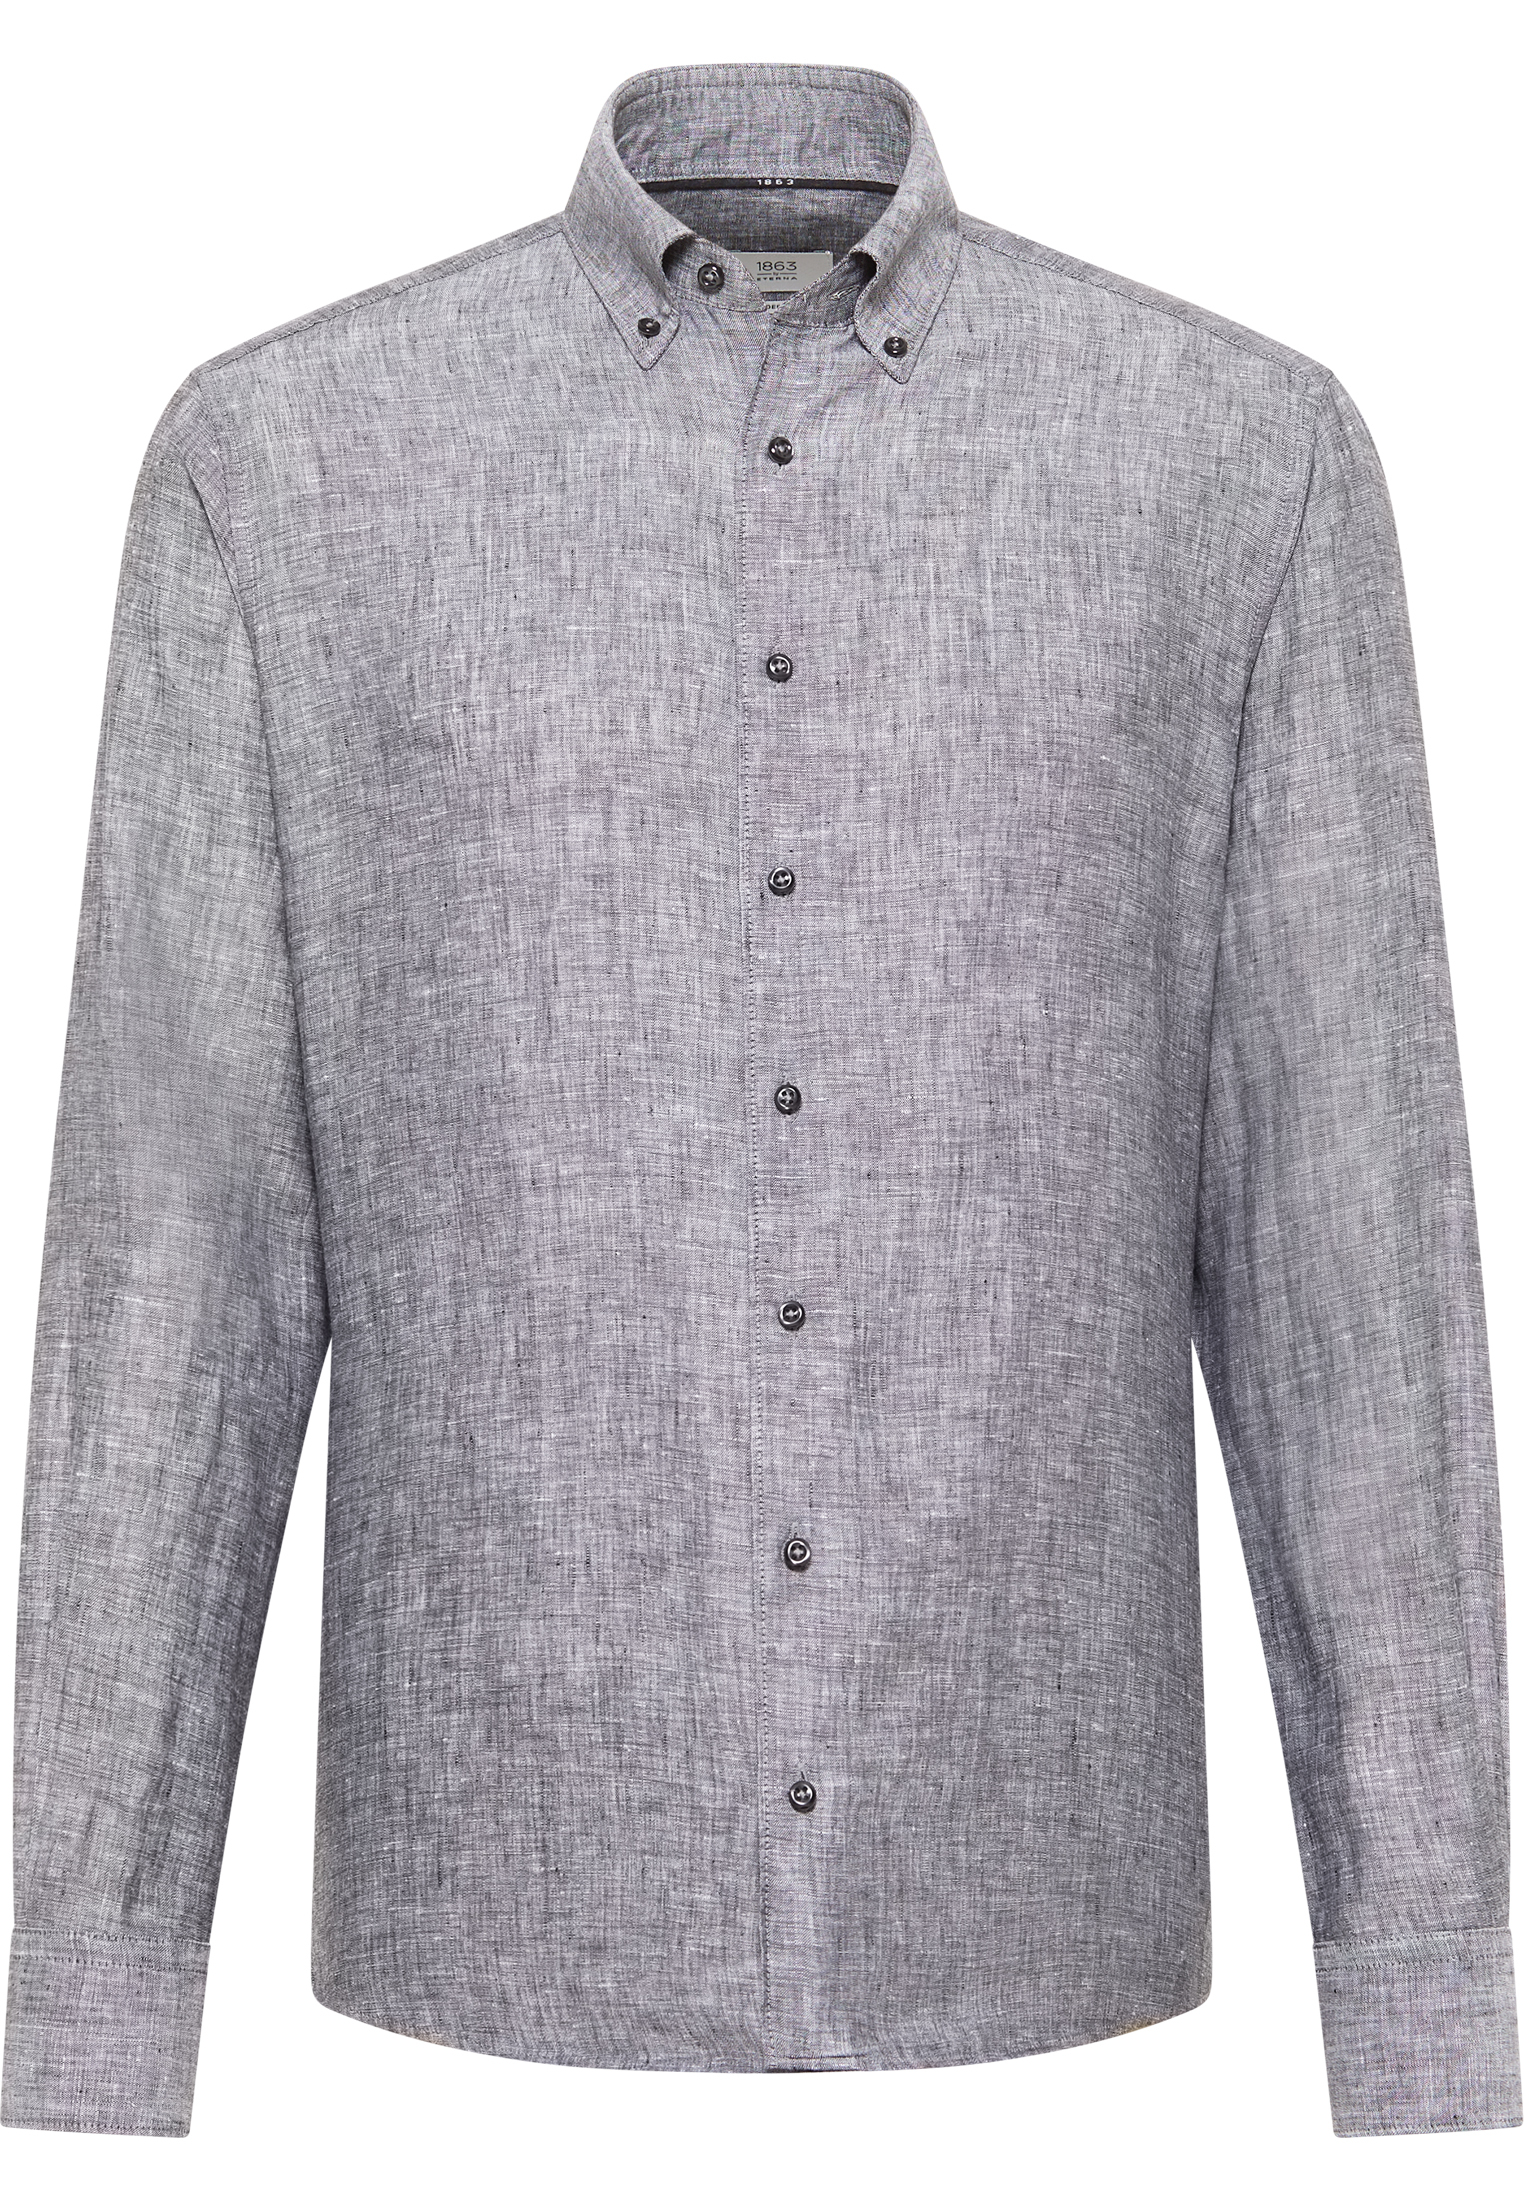 MODERN FIT Shirt in grey plain